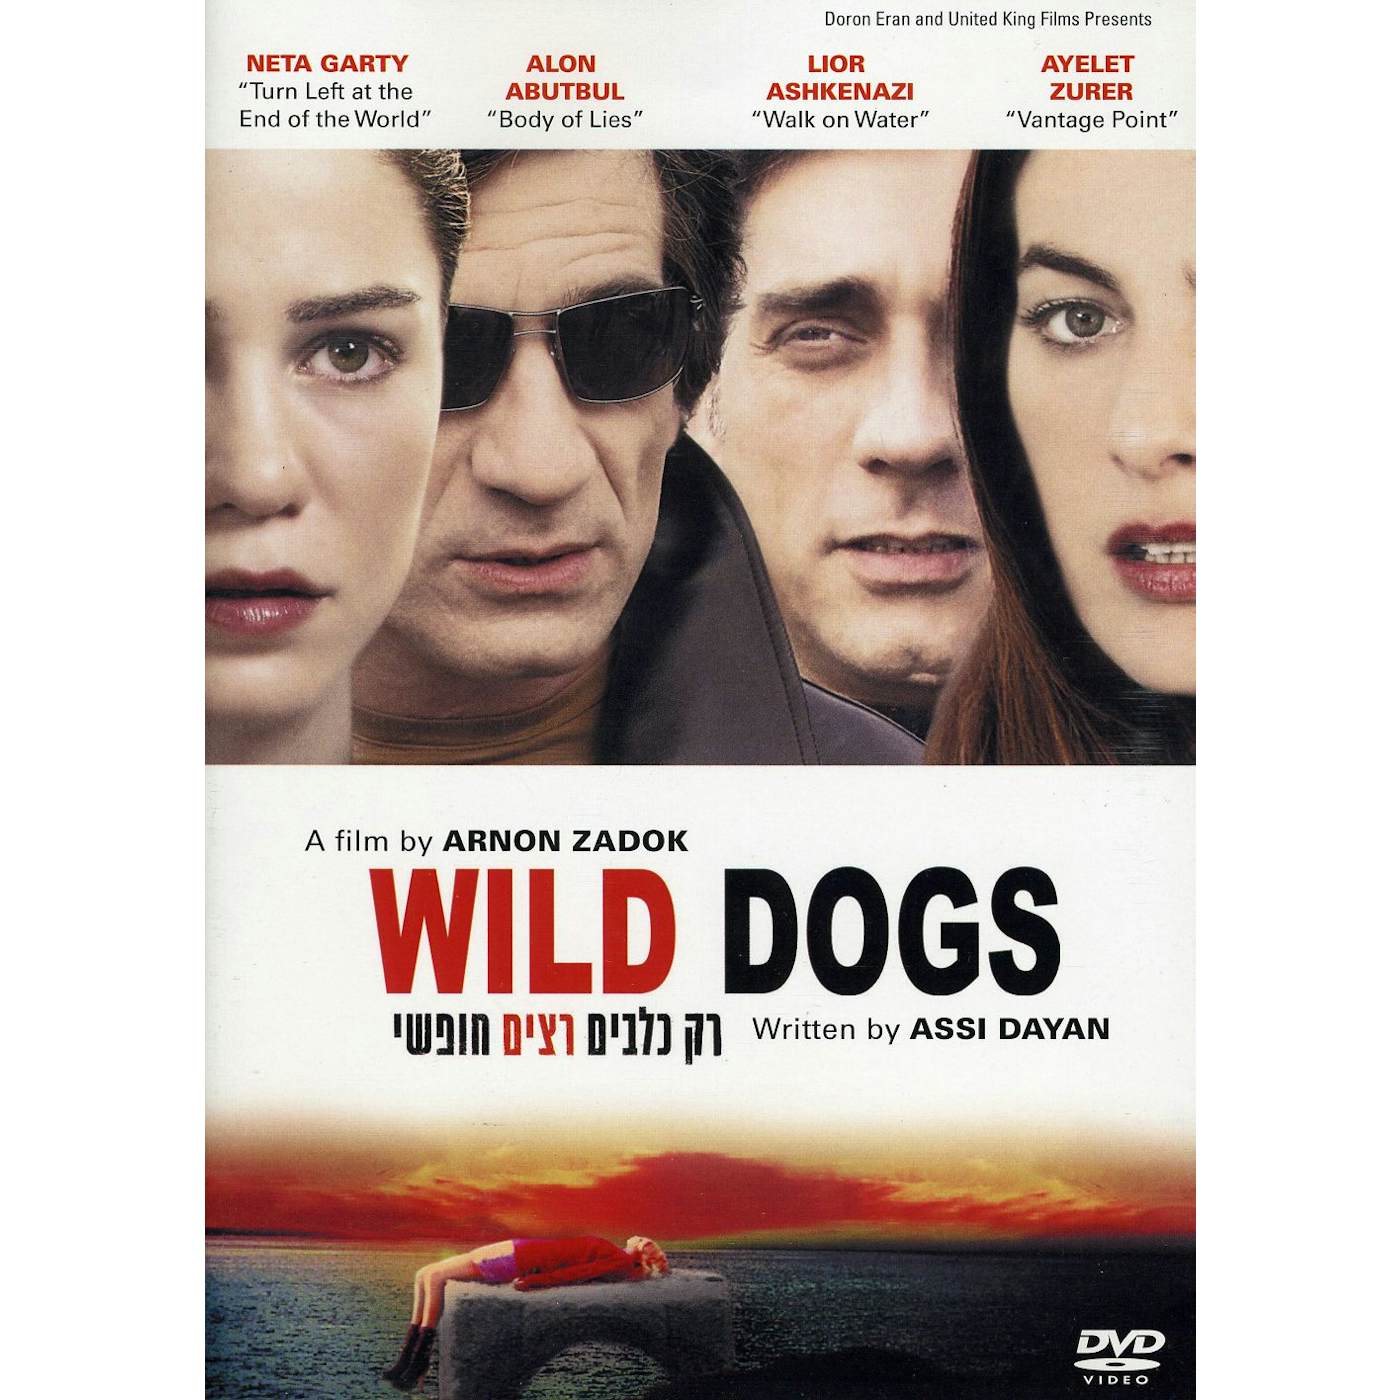 WILD DOGS DVD